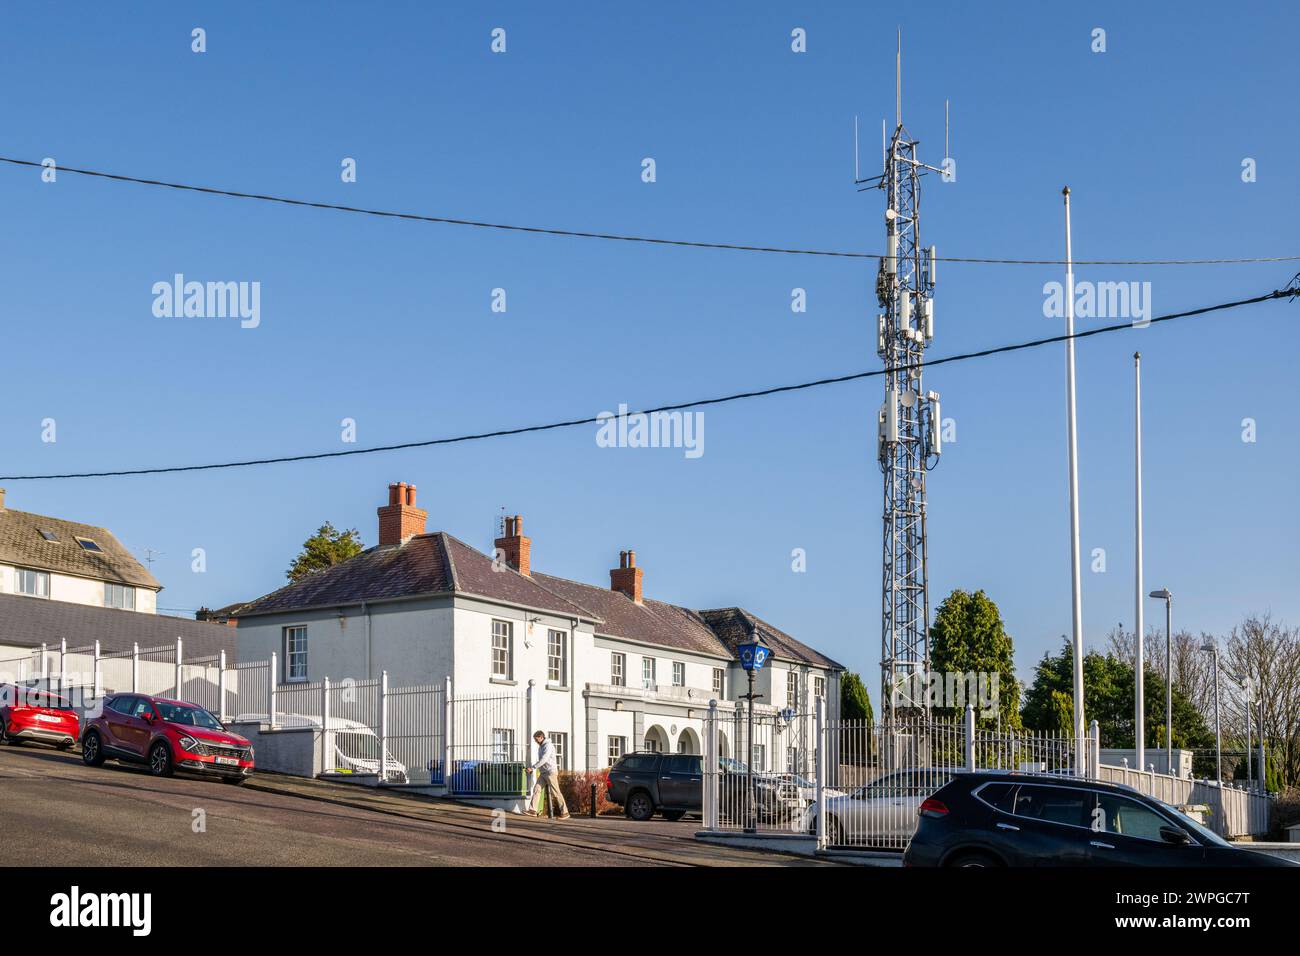 Clonakilty Garda Station, Clonakilty, West Cork, Irlande. Banque D'Images